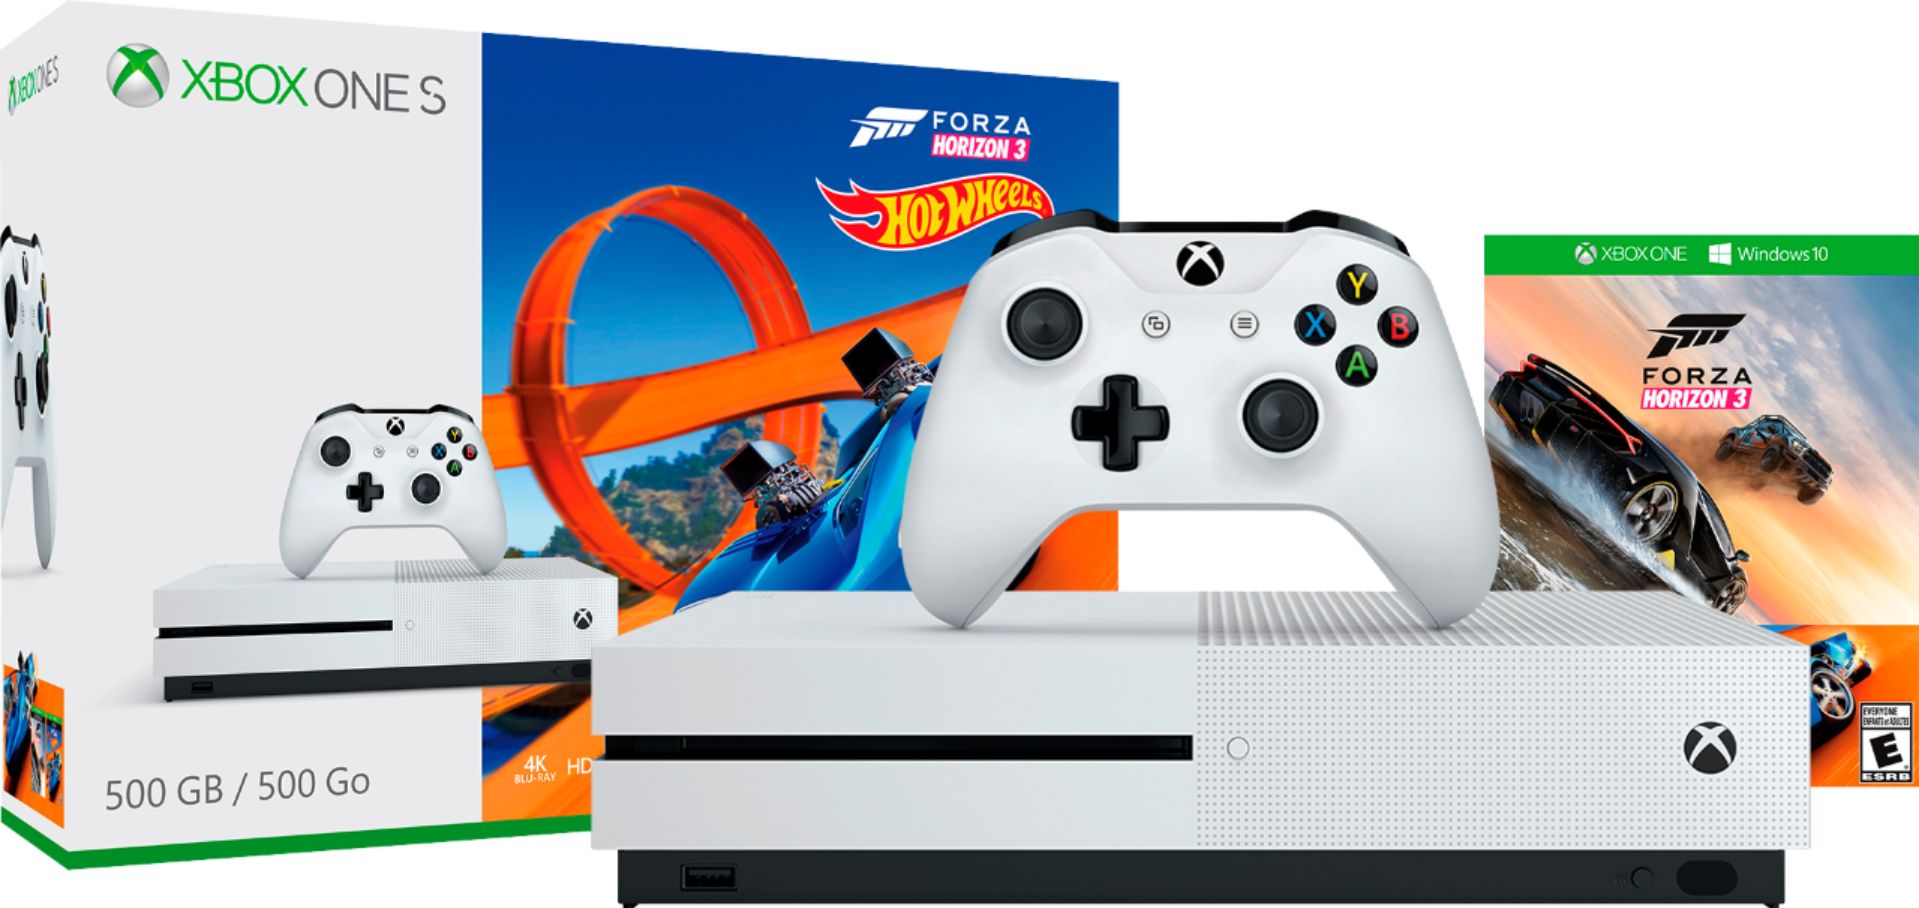 Forza Horizon 3 Bundle Xbox One S 1TB Console Discontinued 